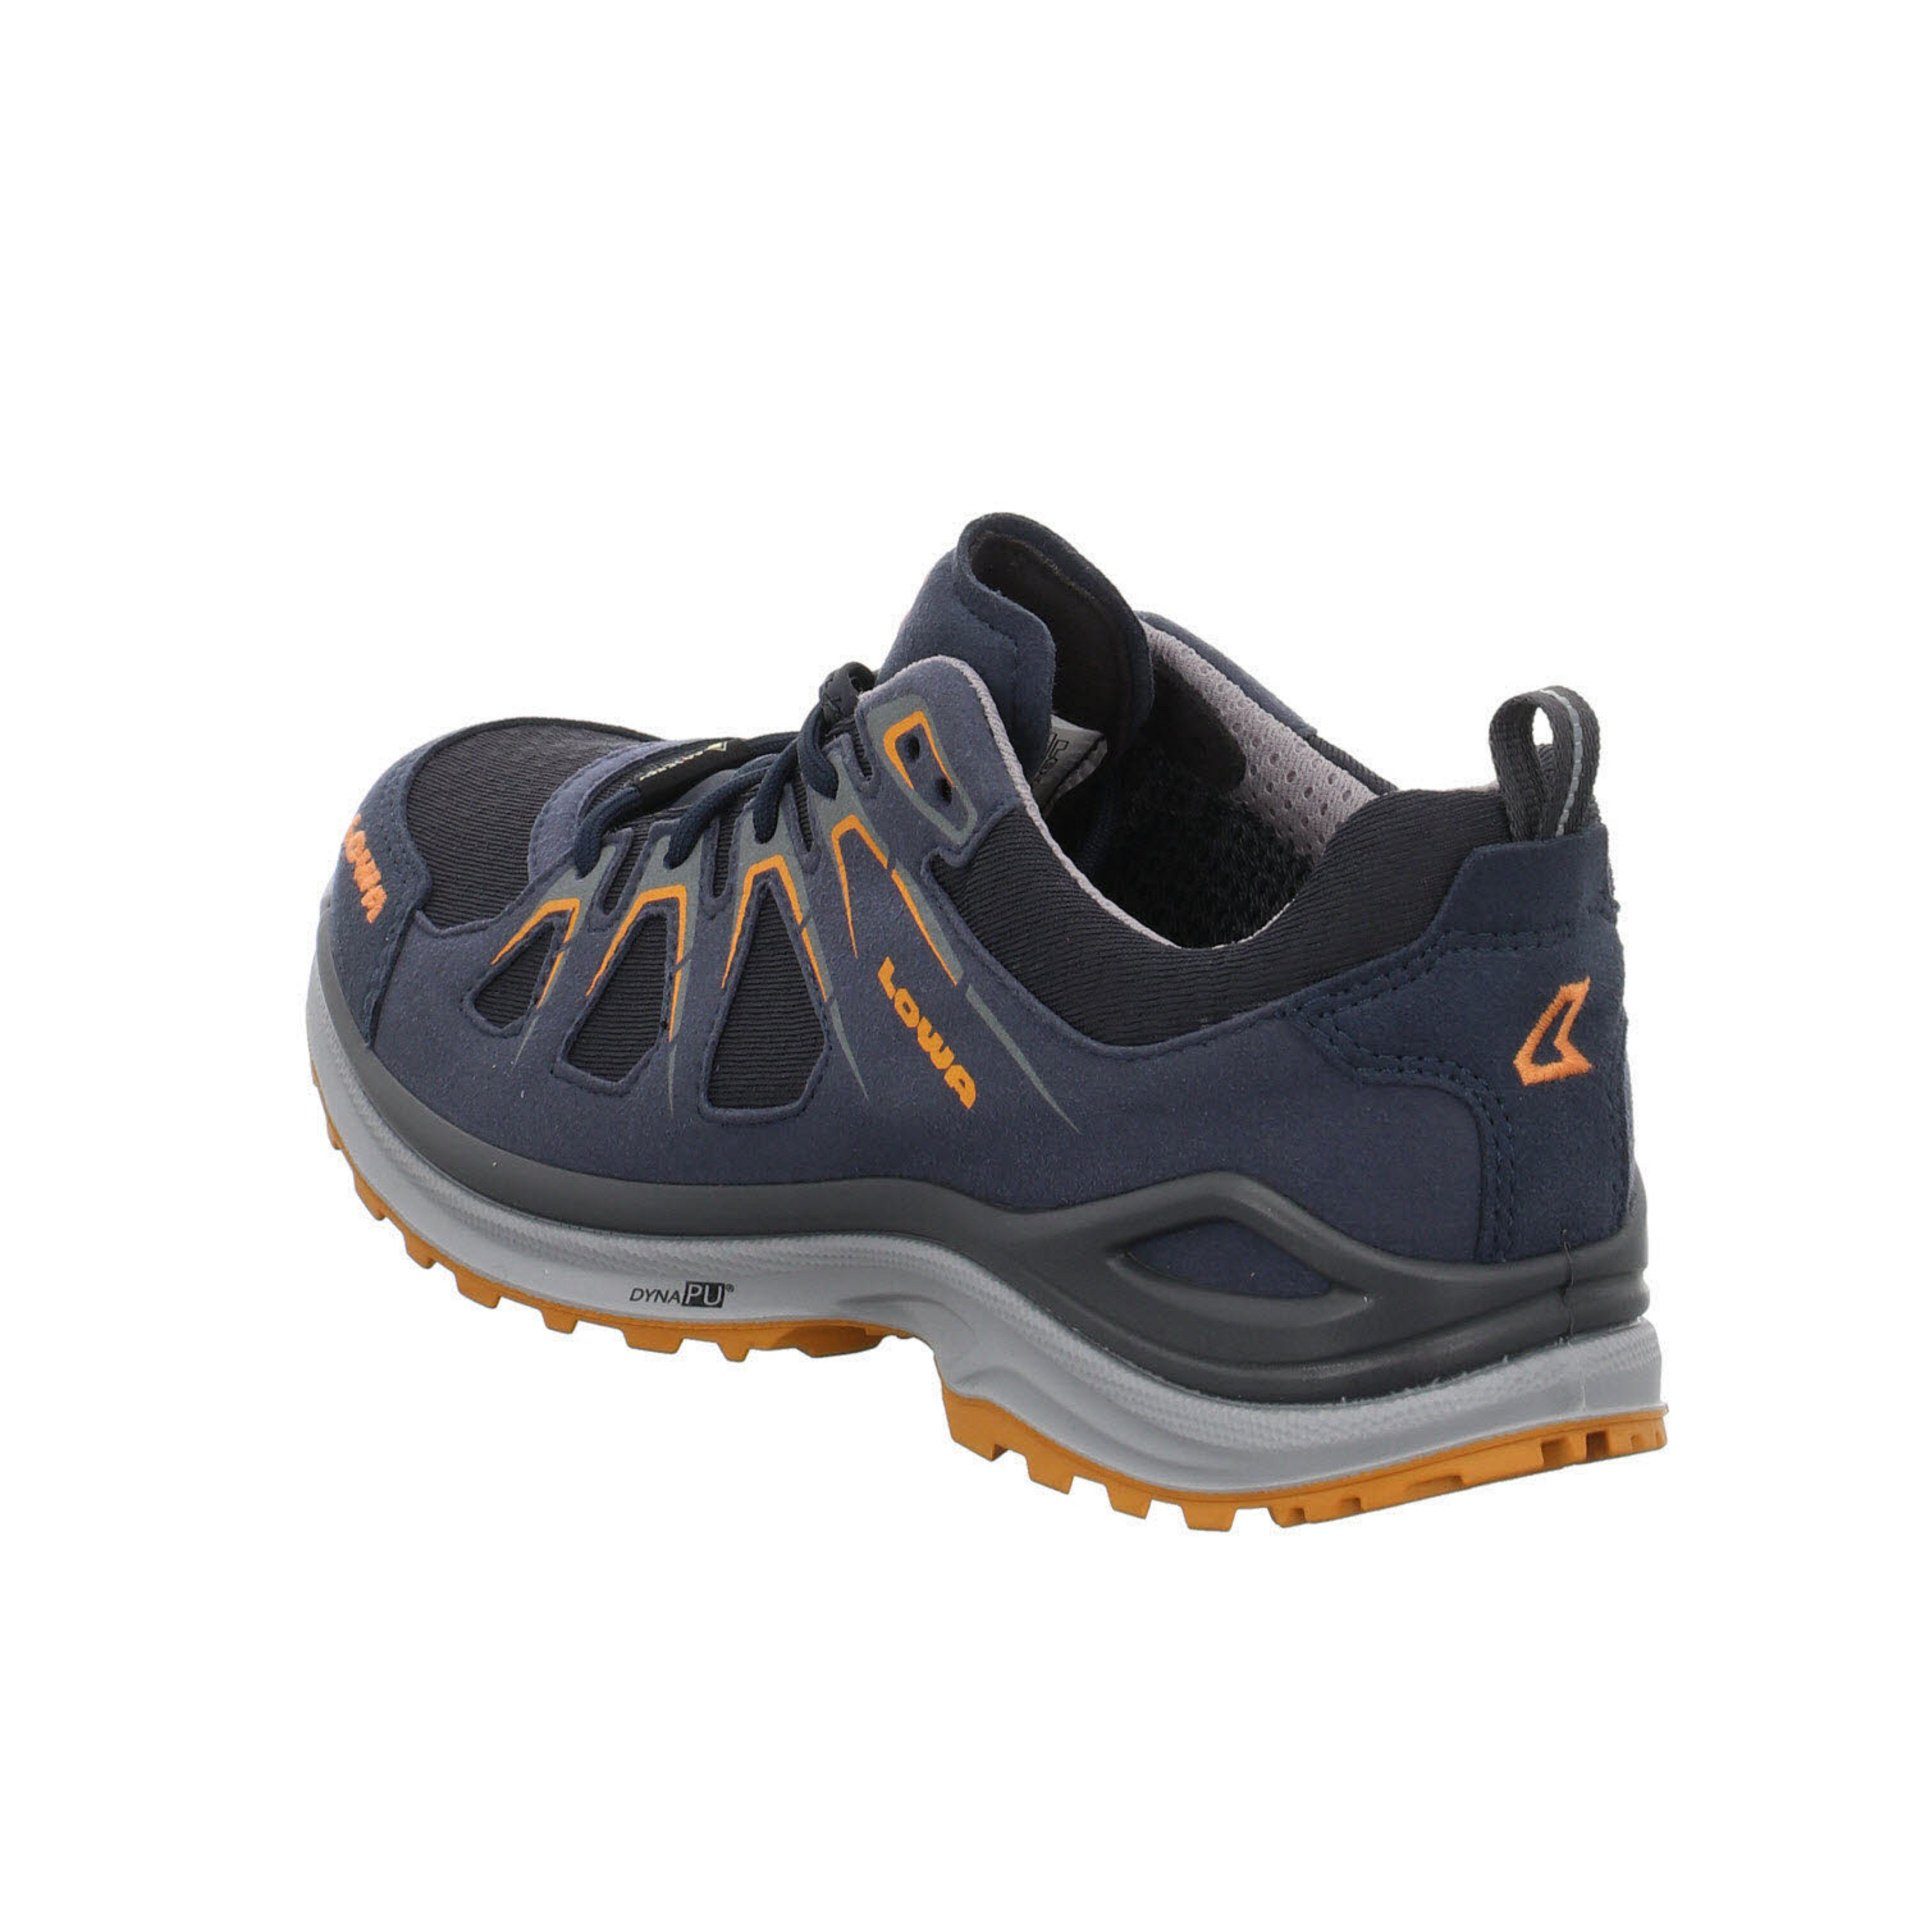 Schuhe Lowa Lo Damen Innox Outdoor Outdoorschuh stahlblau/marine Synthetikkombination Outdoorschuh EVO